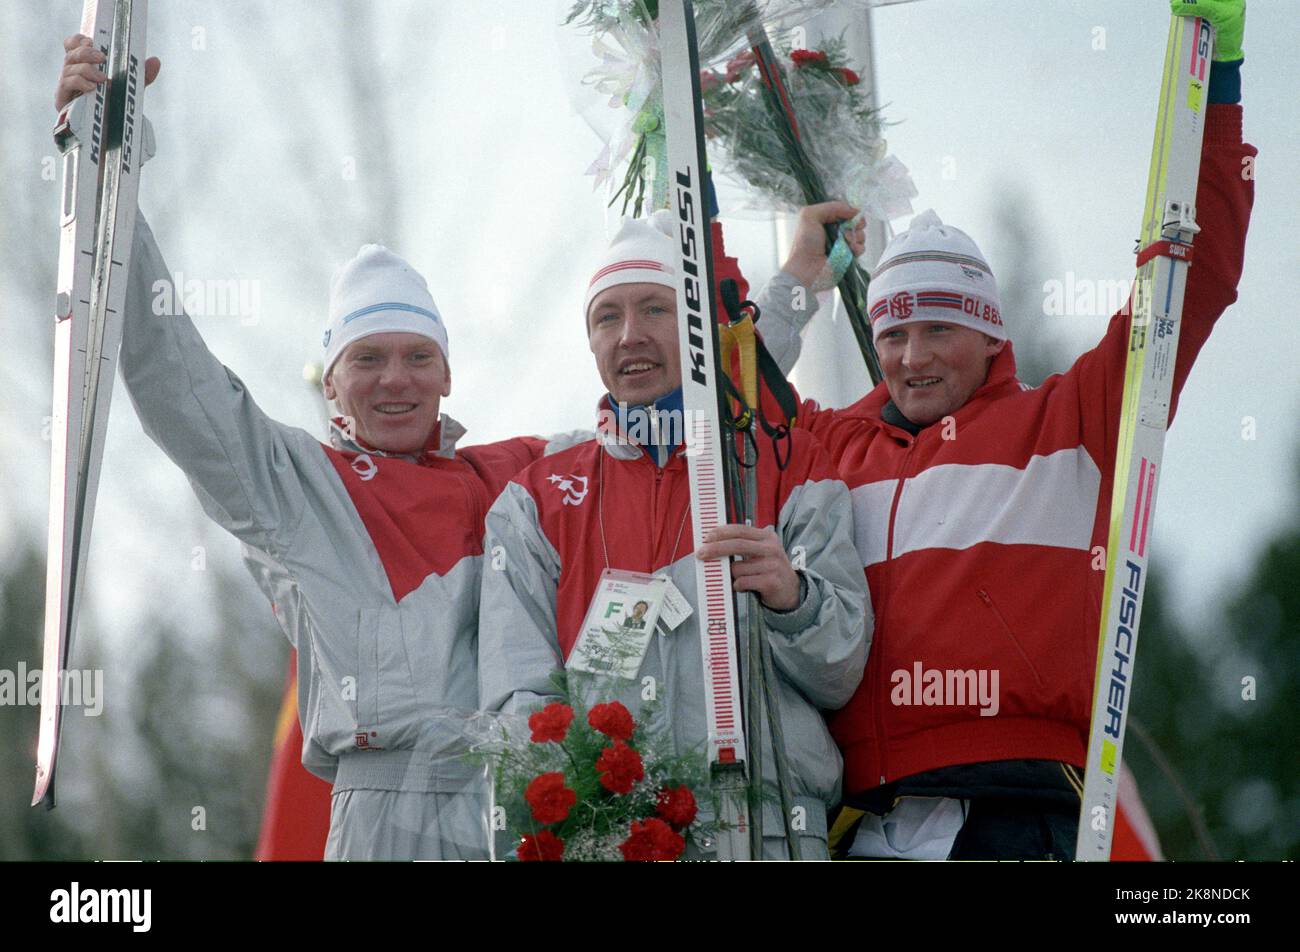 Calgary, Kanada 198802: Olympic Calgary 1988. Skilanglauf, 30km, Herren. Auf der Siegerpalette: Aleksej Prokurorov (SOV/1), Vladimir Smirnov (SOV/2) und Vegard Ulvang (NOR/3). Foto: Bjørn Sigurdsøn Stockfoto